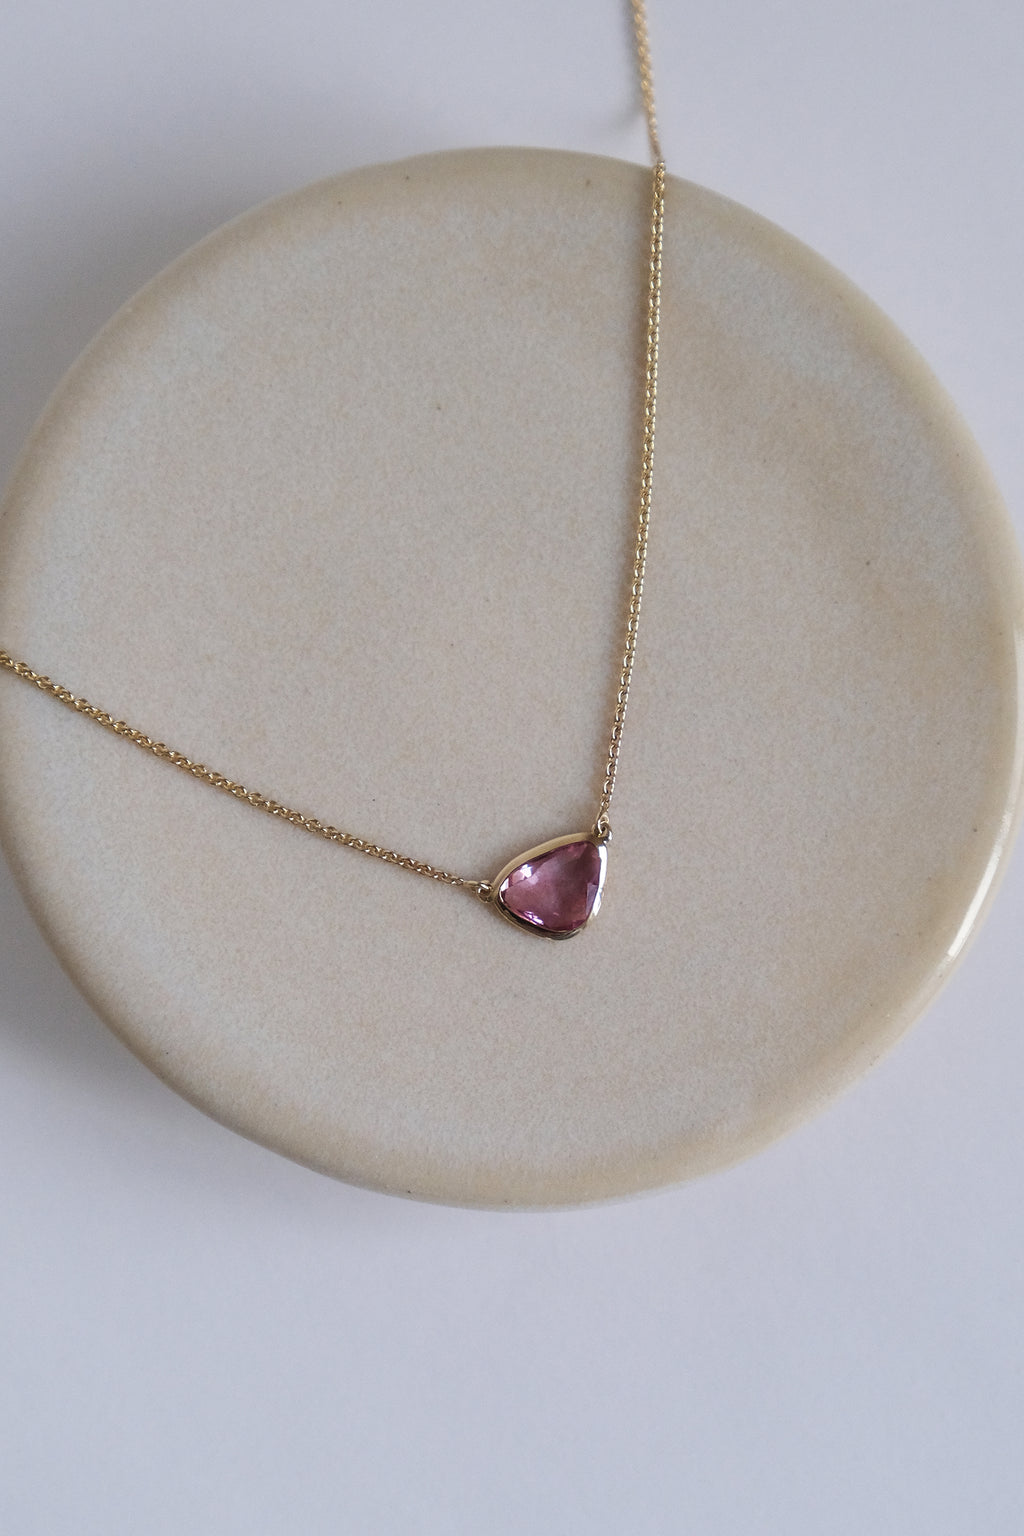 Rose cut pink sapphire necklace // Peach